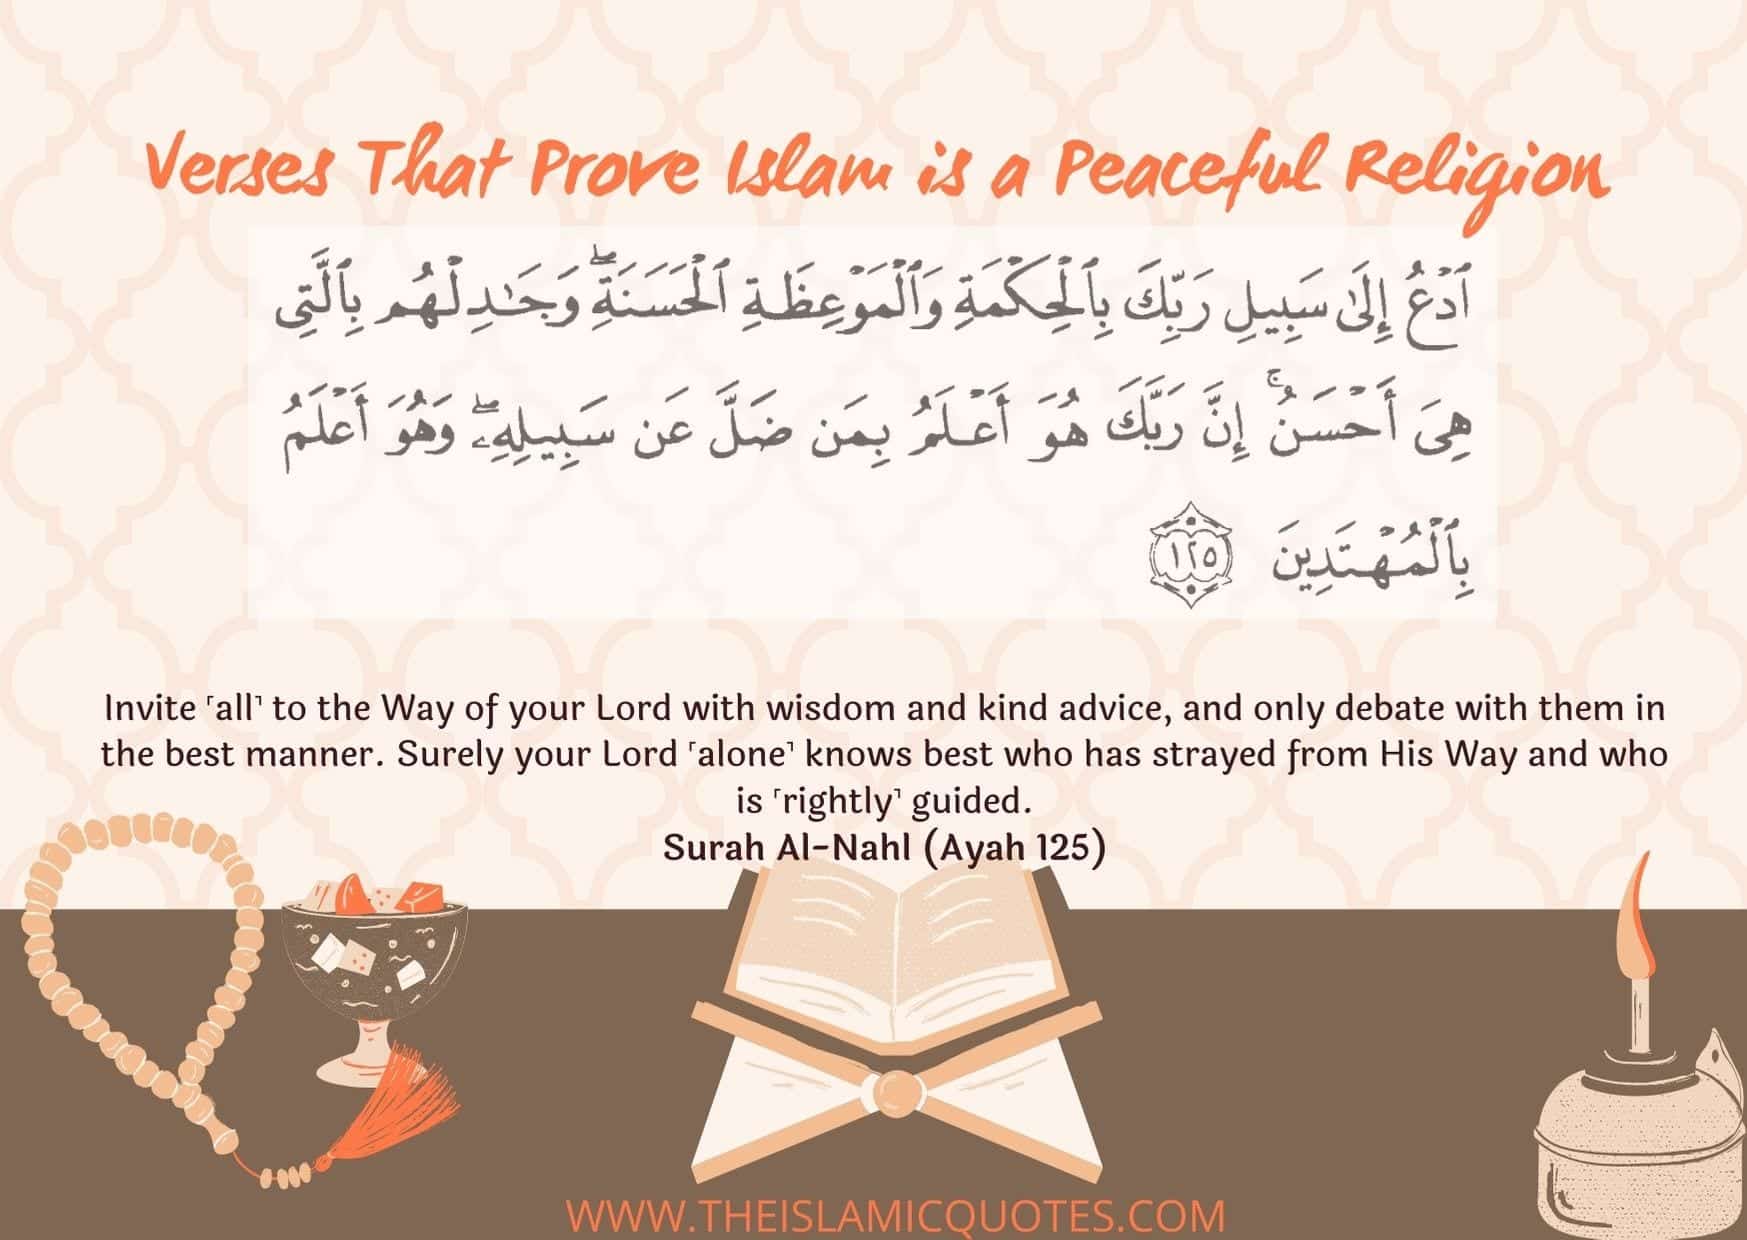 Quranic Verses on Peace- 10 Verses Proving Islam Is Peaceful